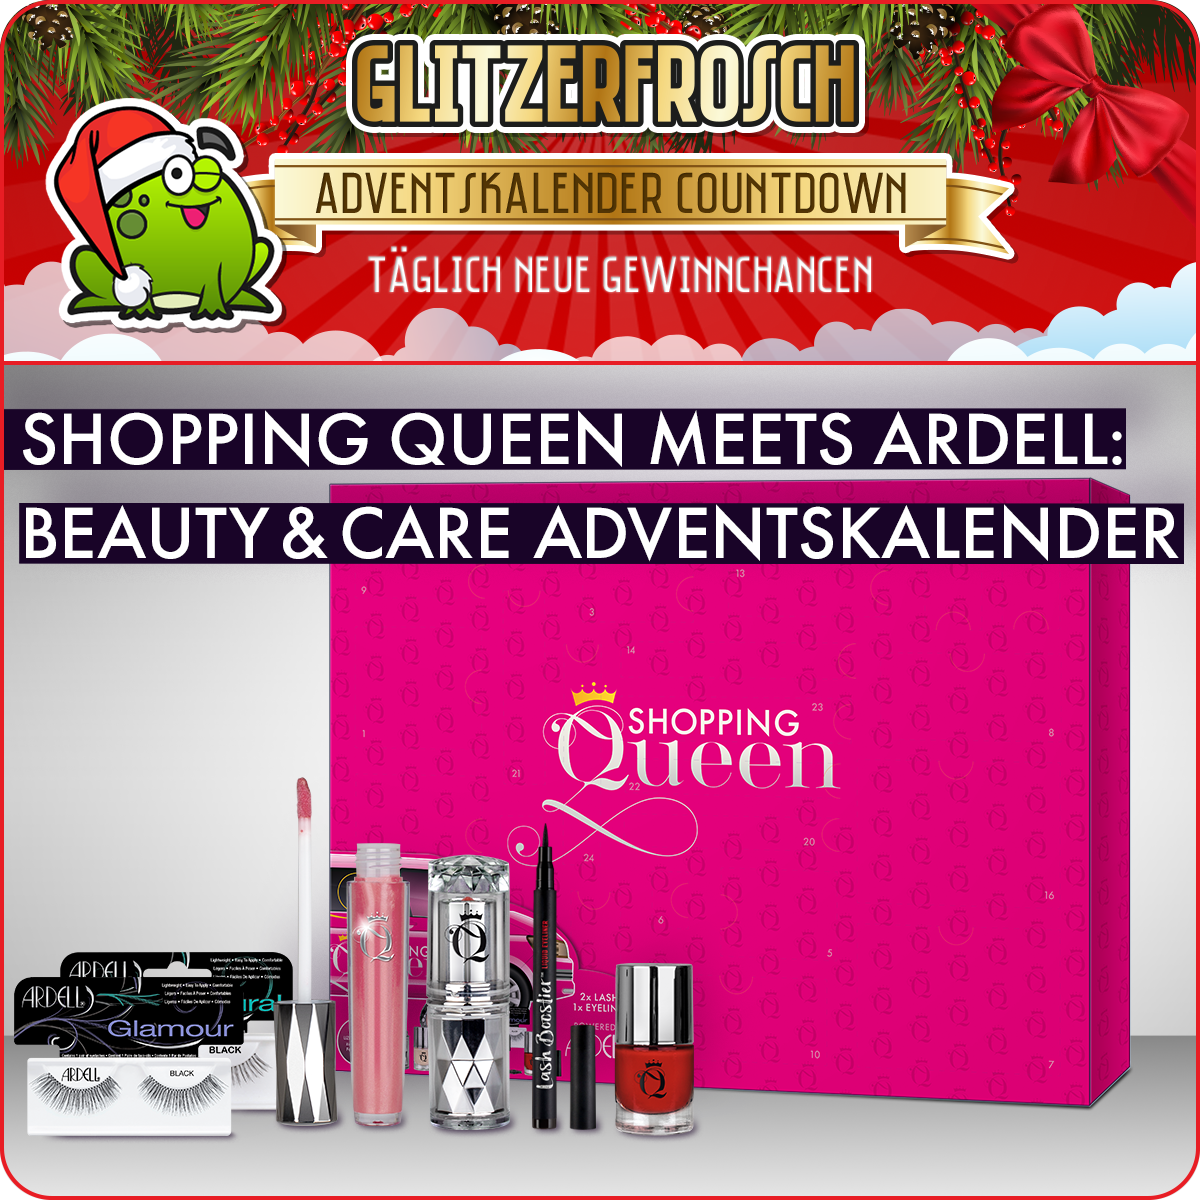 Shopping gewinnen Adventskalender Queen I